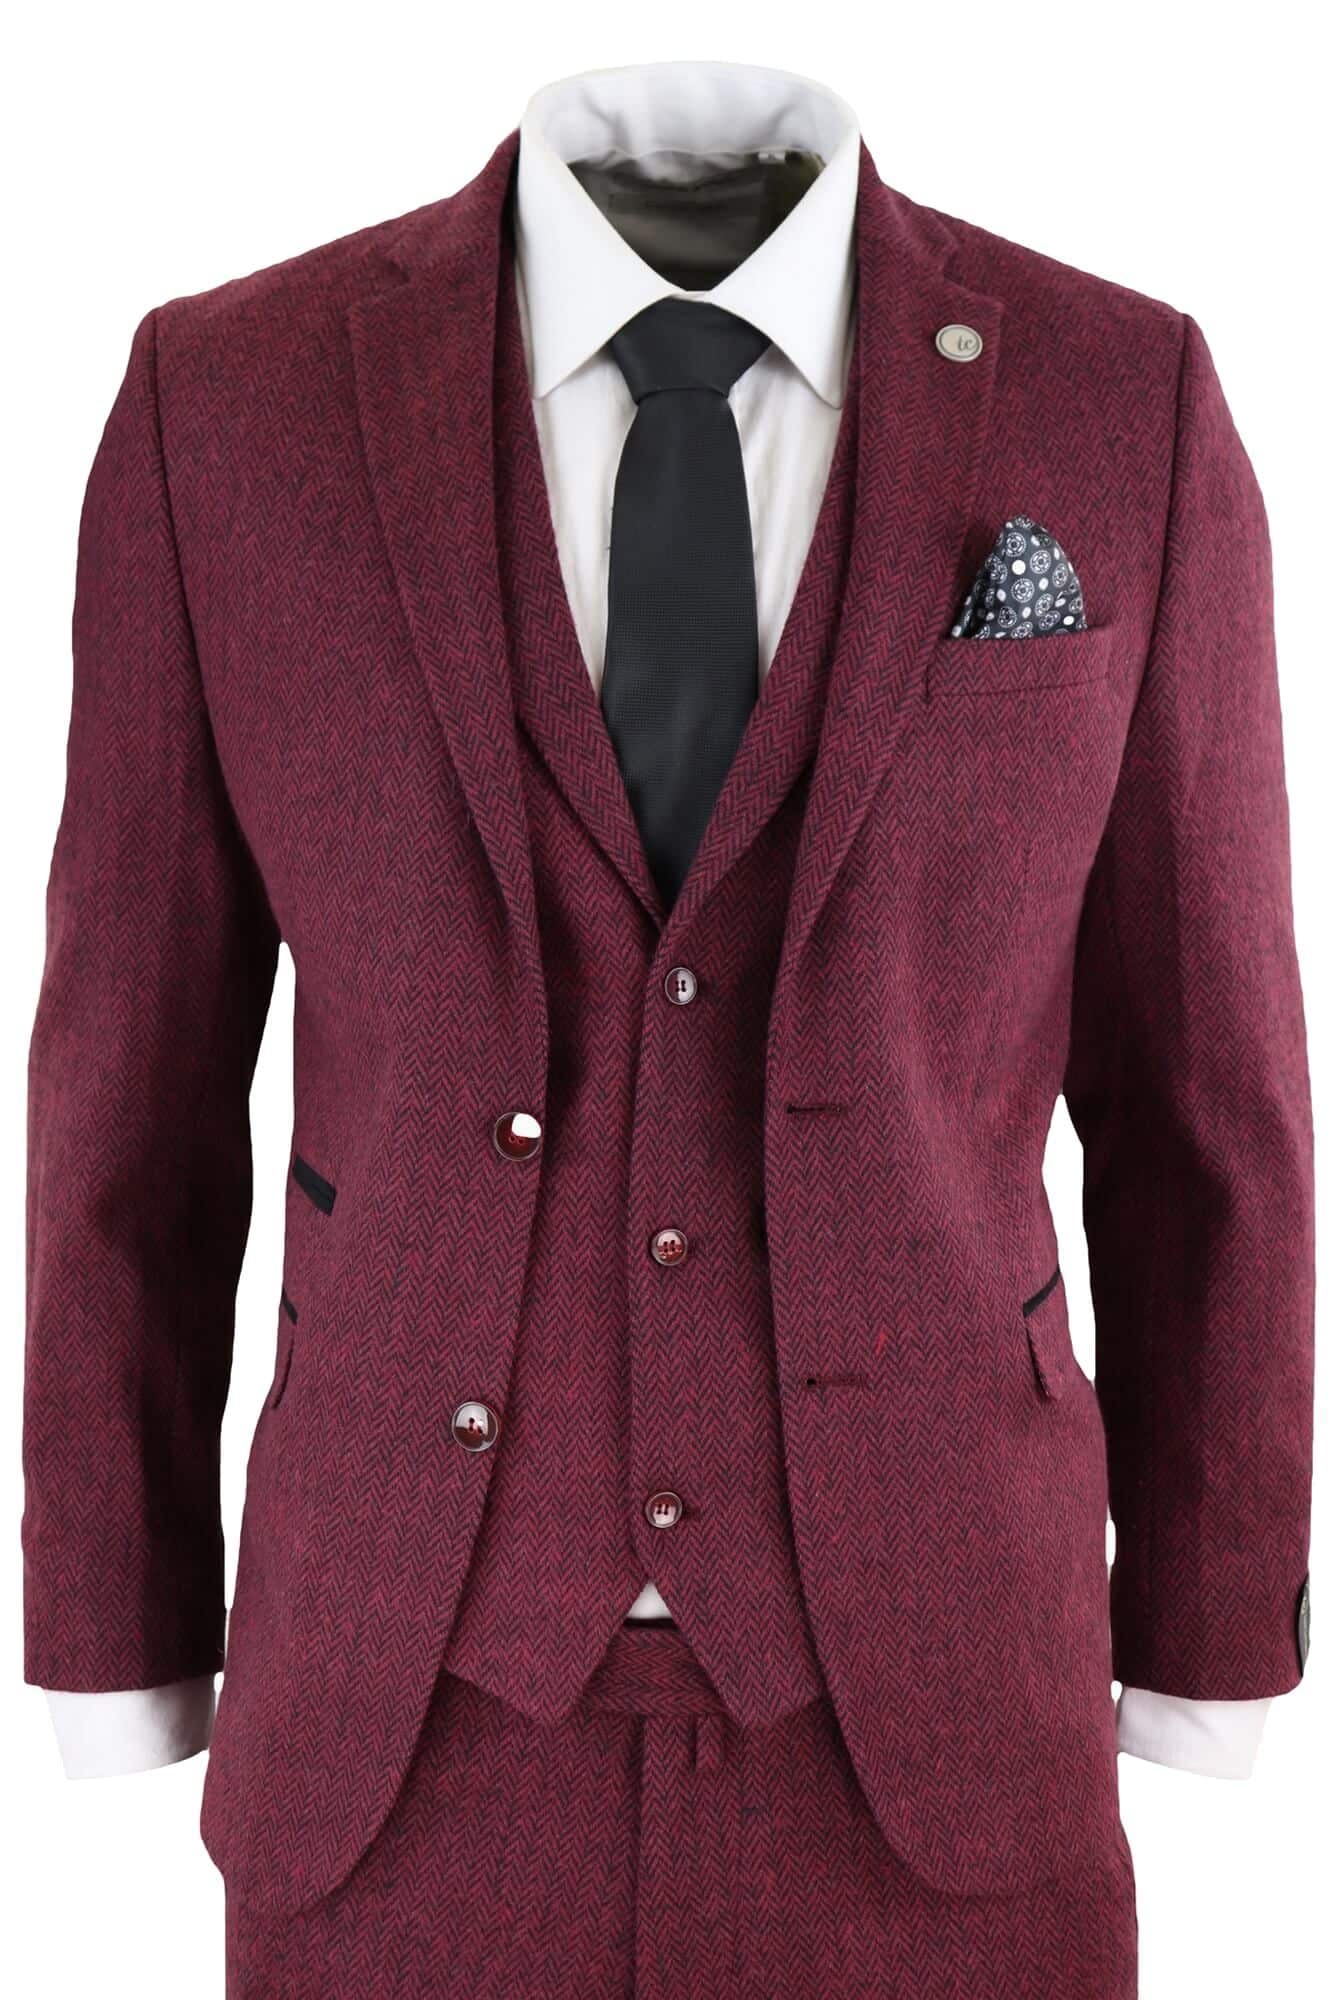 Men's Herringbone Wine Maroon 3 Piece Tweed Suit - STZ11